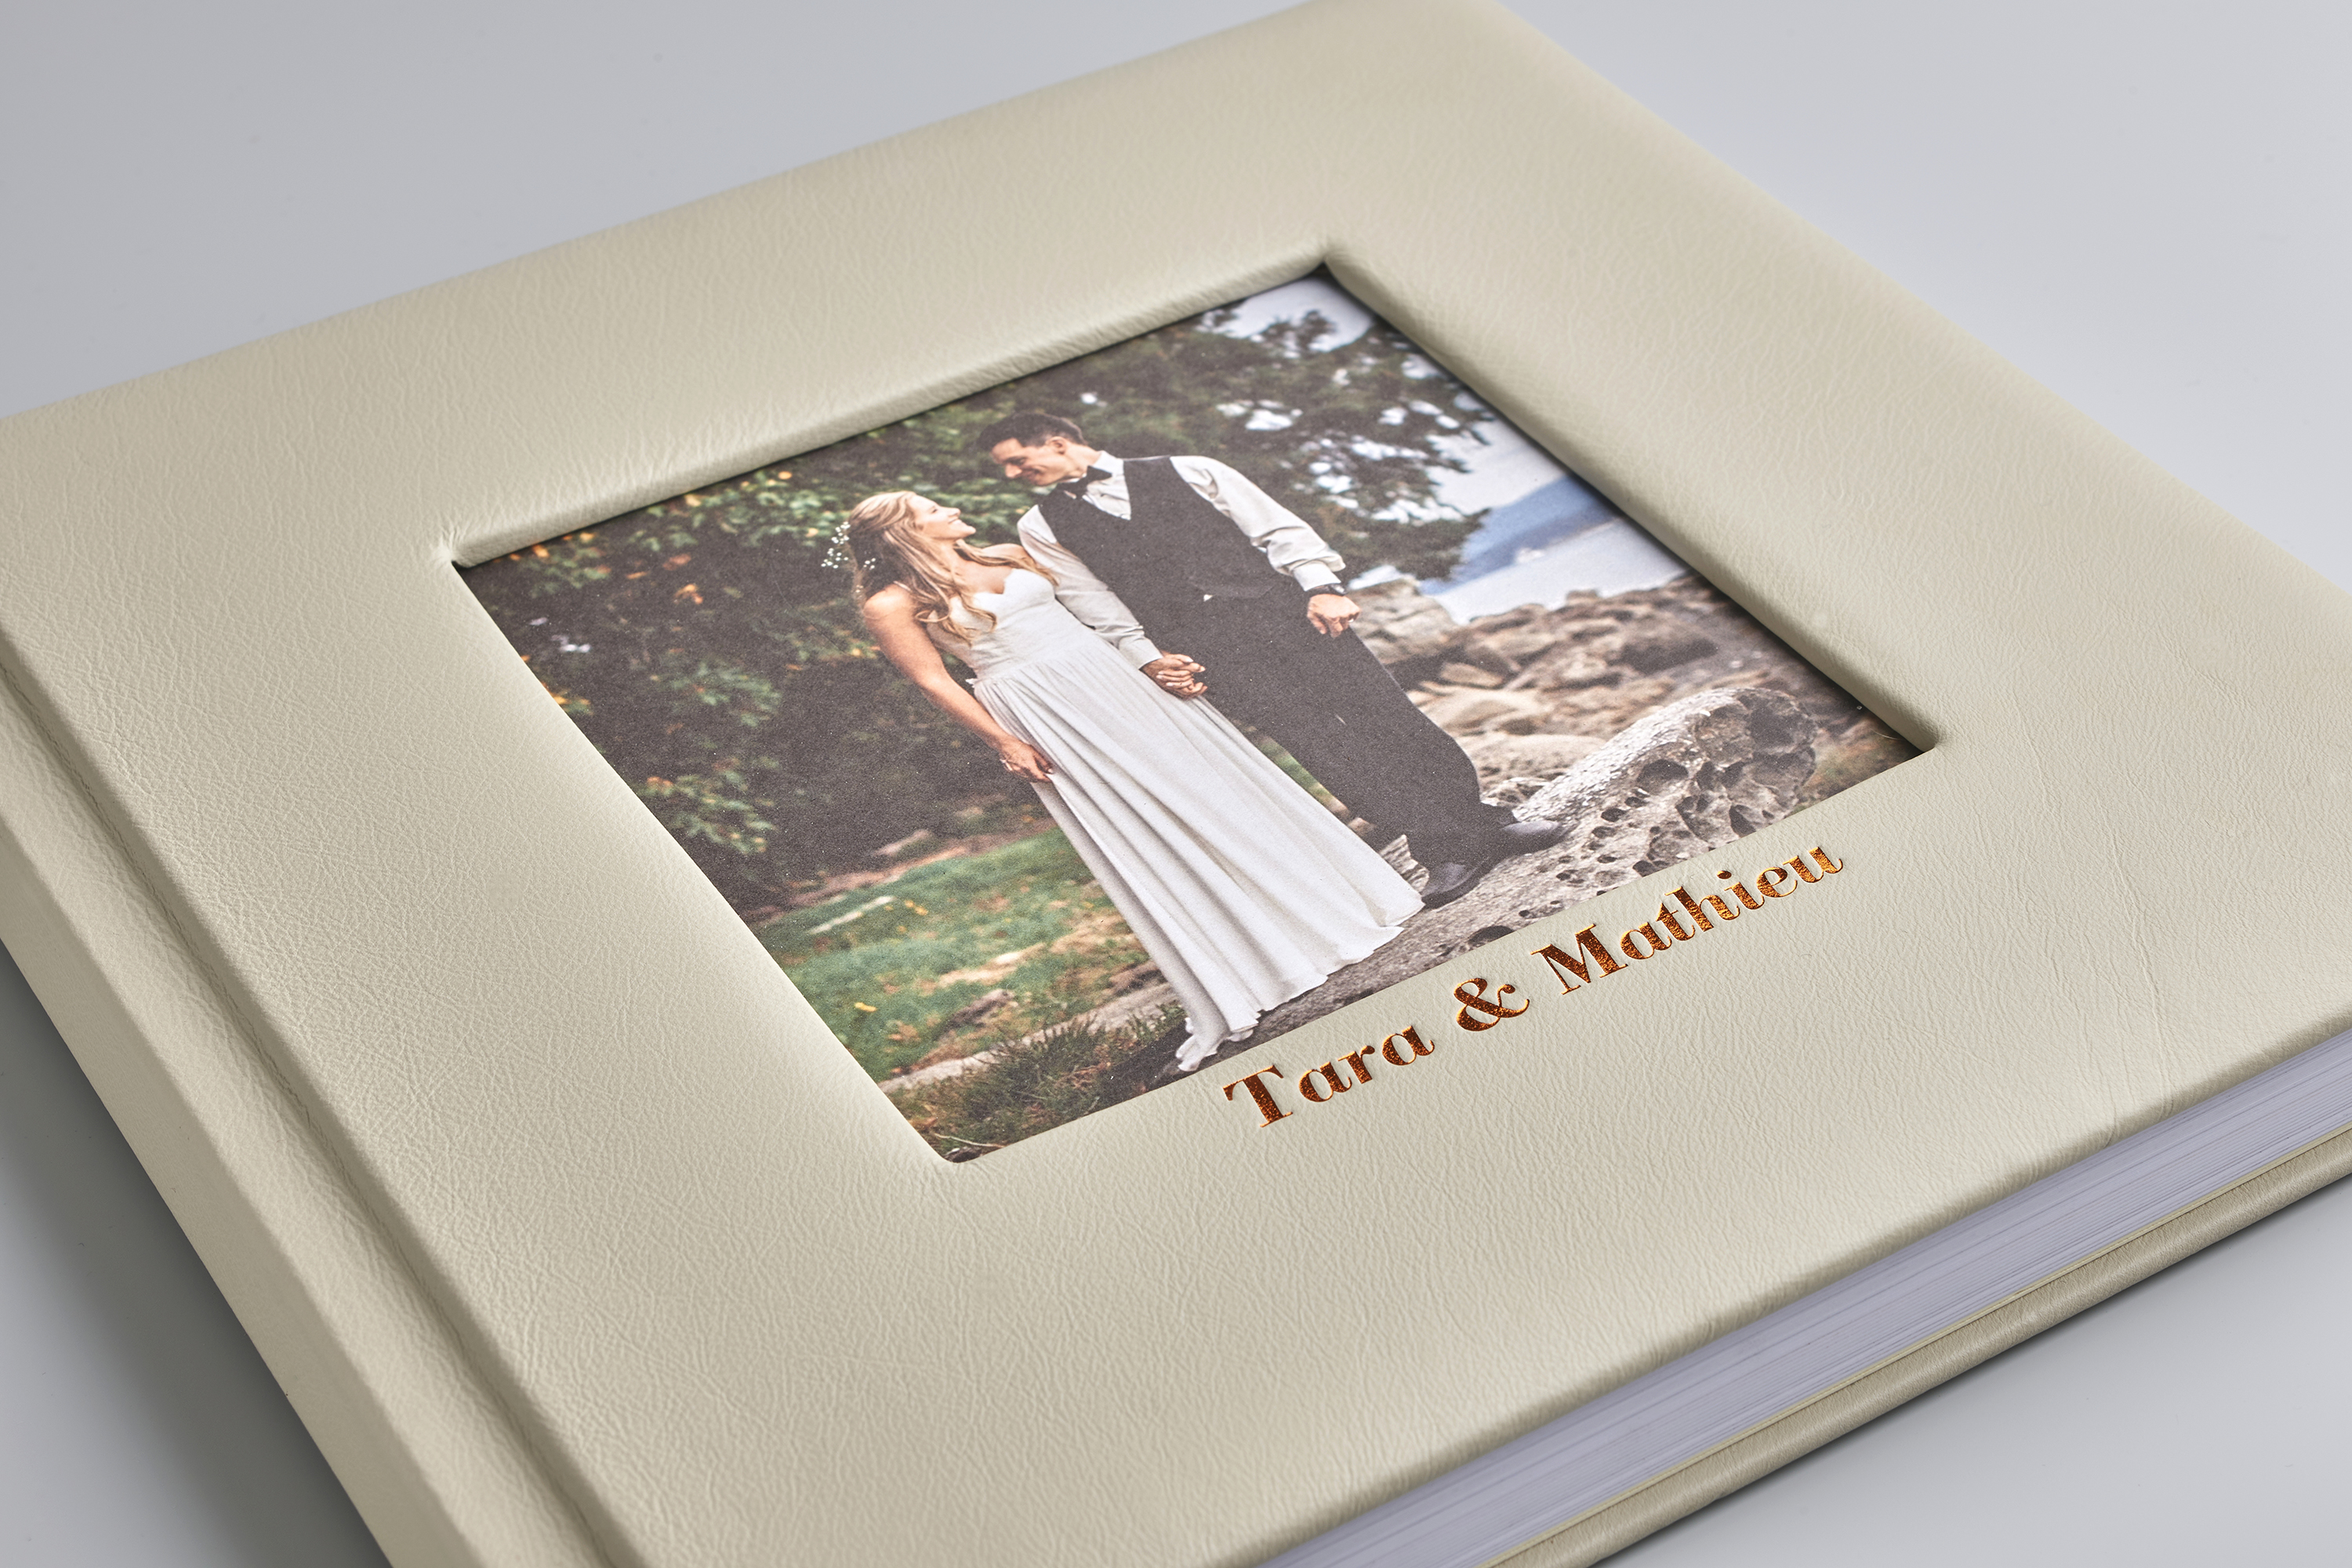 Photo of couple on leather wedding photo album cover.Photo of couple on leather wedding photo album cover.